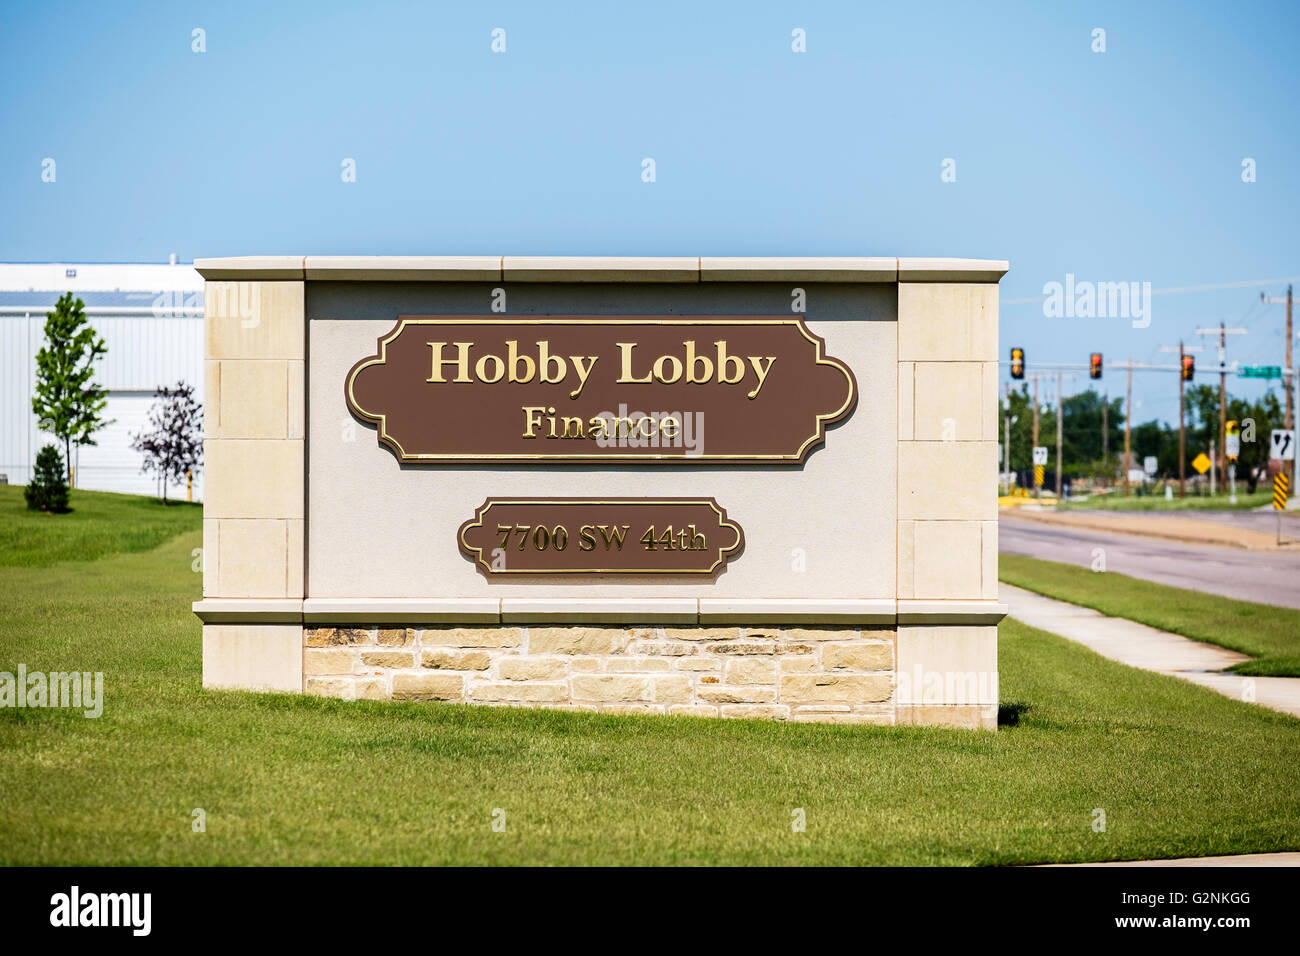 Hobby Lobby monument sign advertising le ministère des finances à 7707 SW 44th street, Oklahoma City, Oklahoma, USA. Banque D'Images